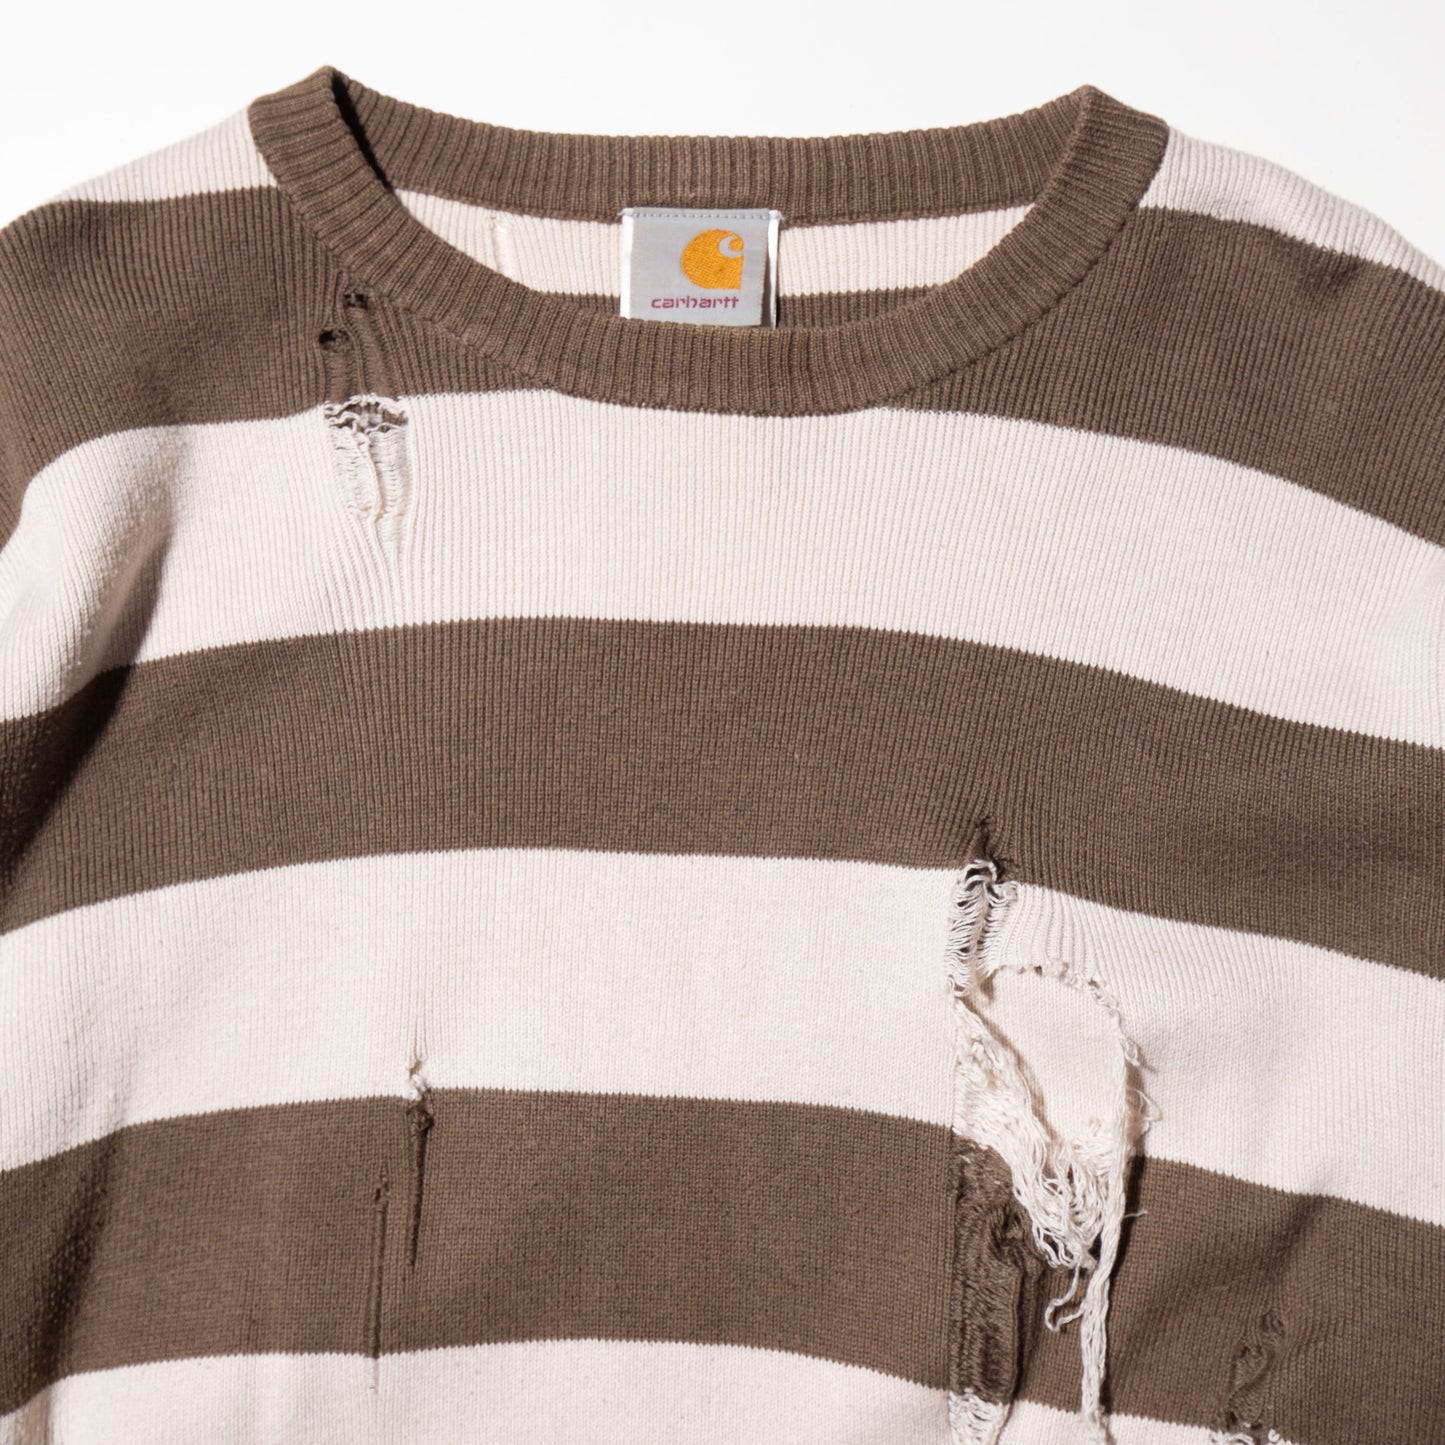 vintage carhartt broken border sweater